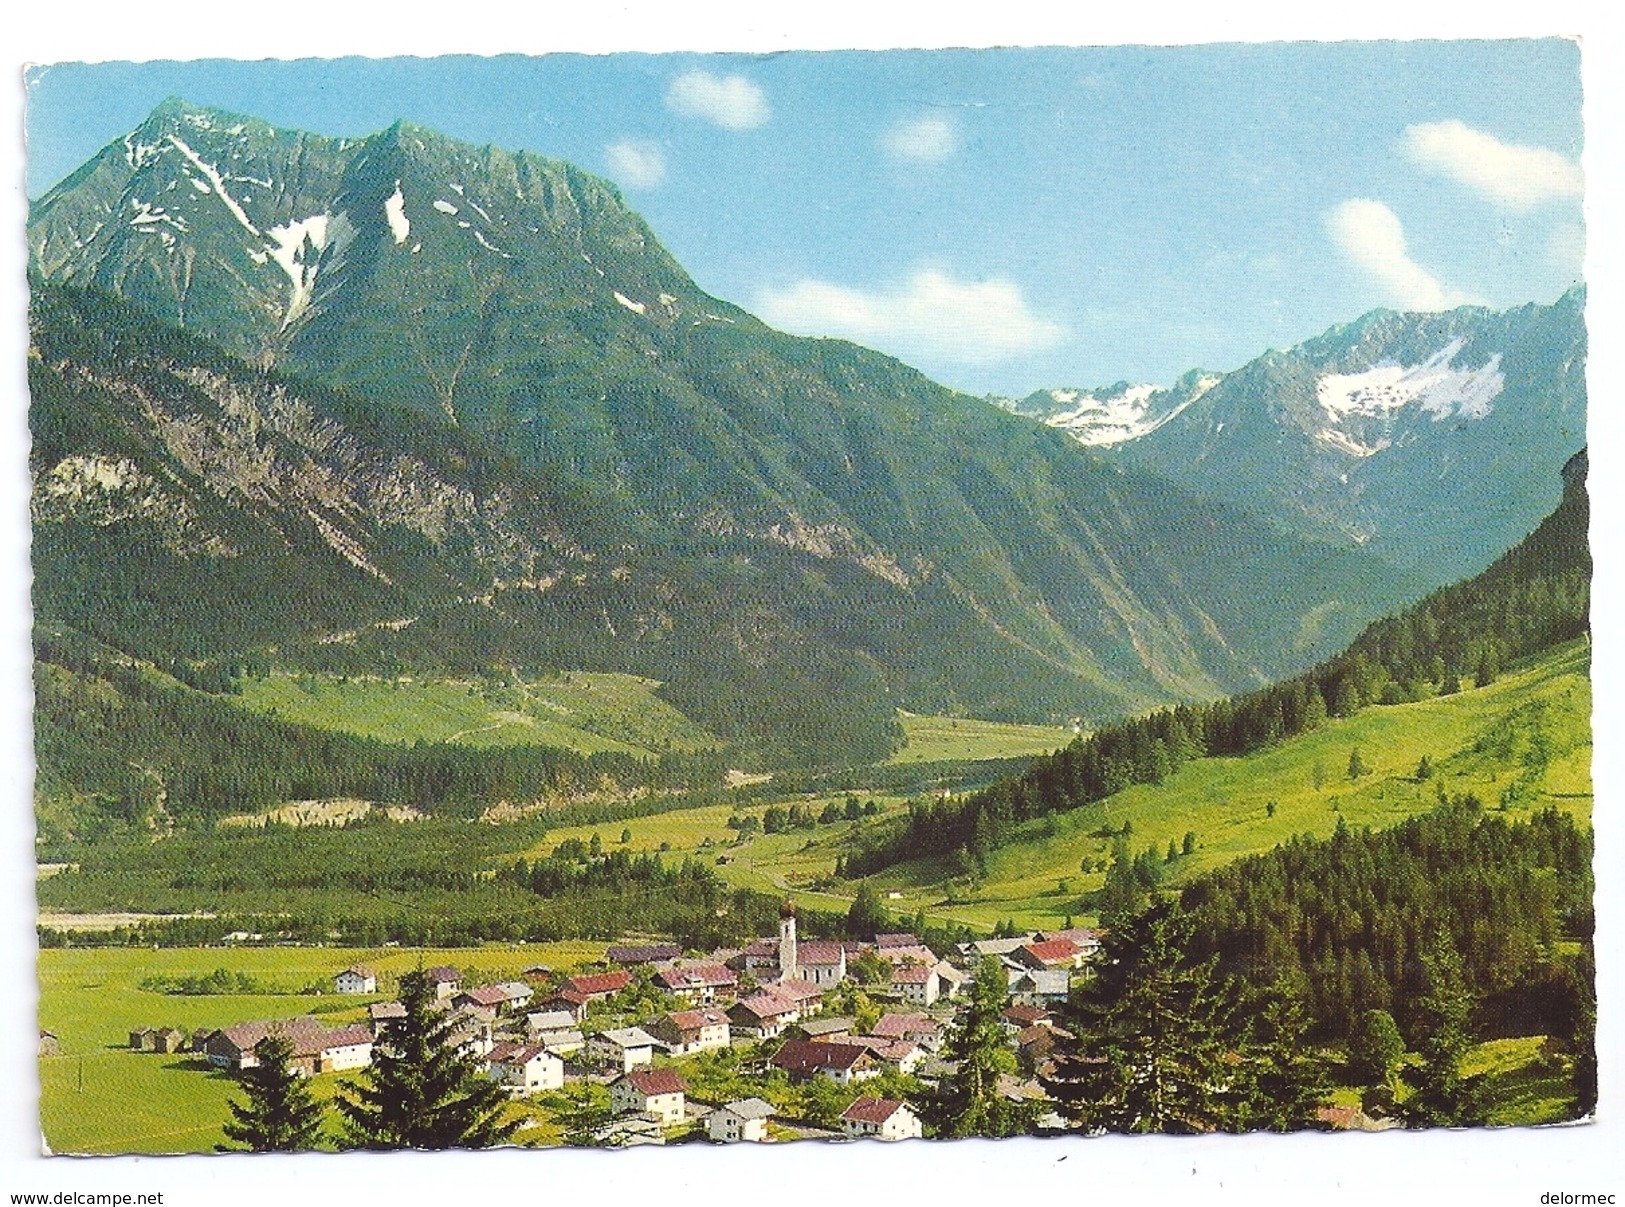 CPSM Lechtal Tyrol Tirol Autriche Ostereich Vorderhornbach éditeur Franz Milz Reutte N° 206/583  écrite Timbrée 1984 - Lechtal